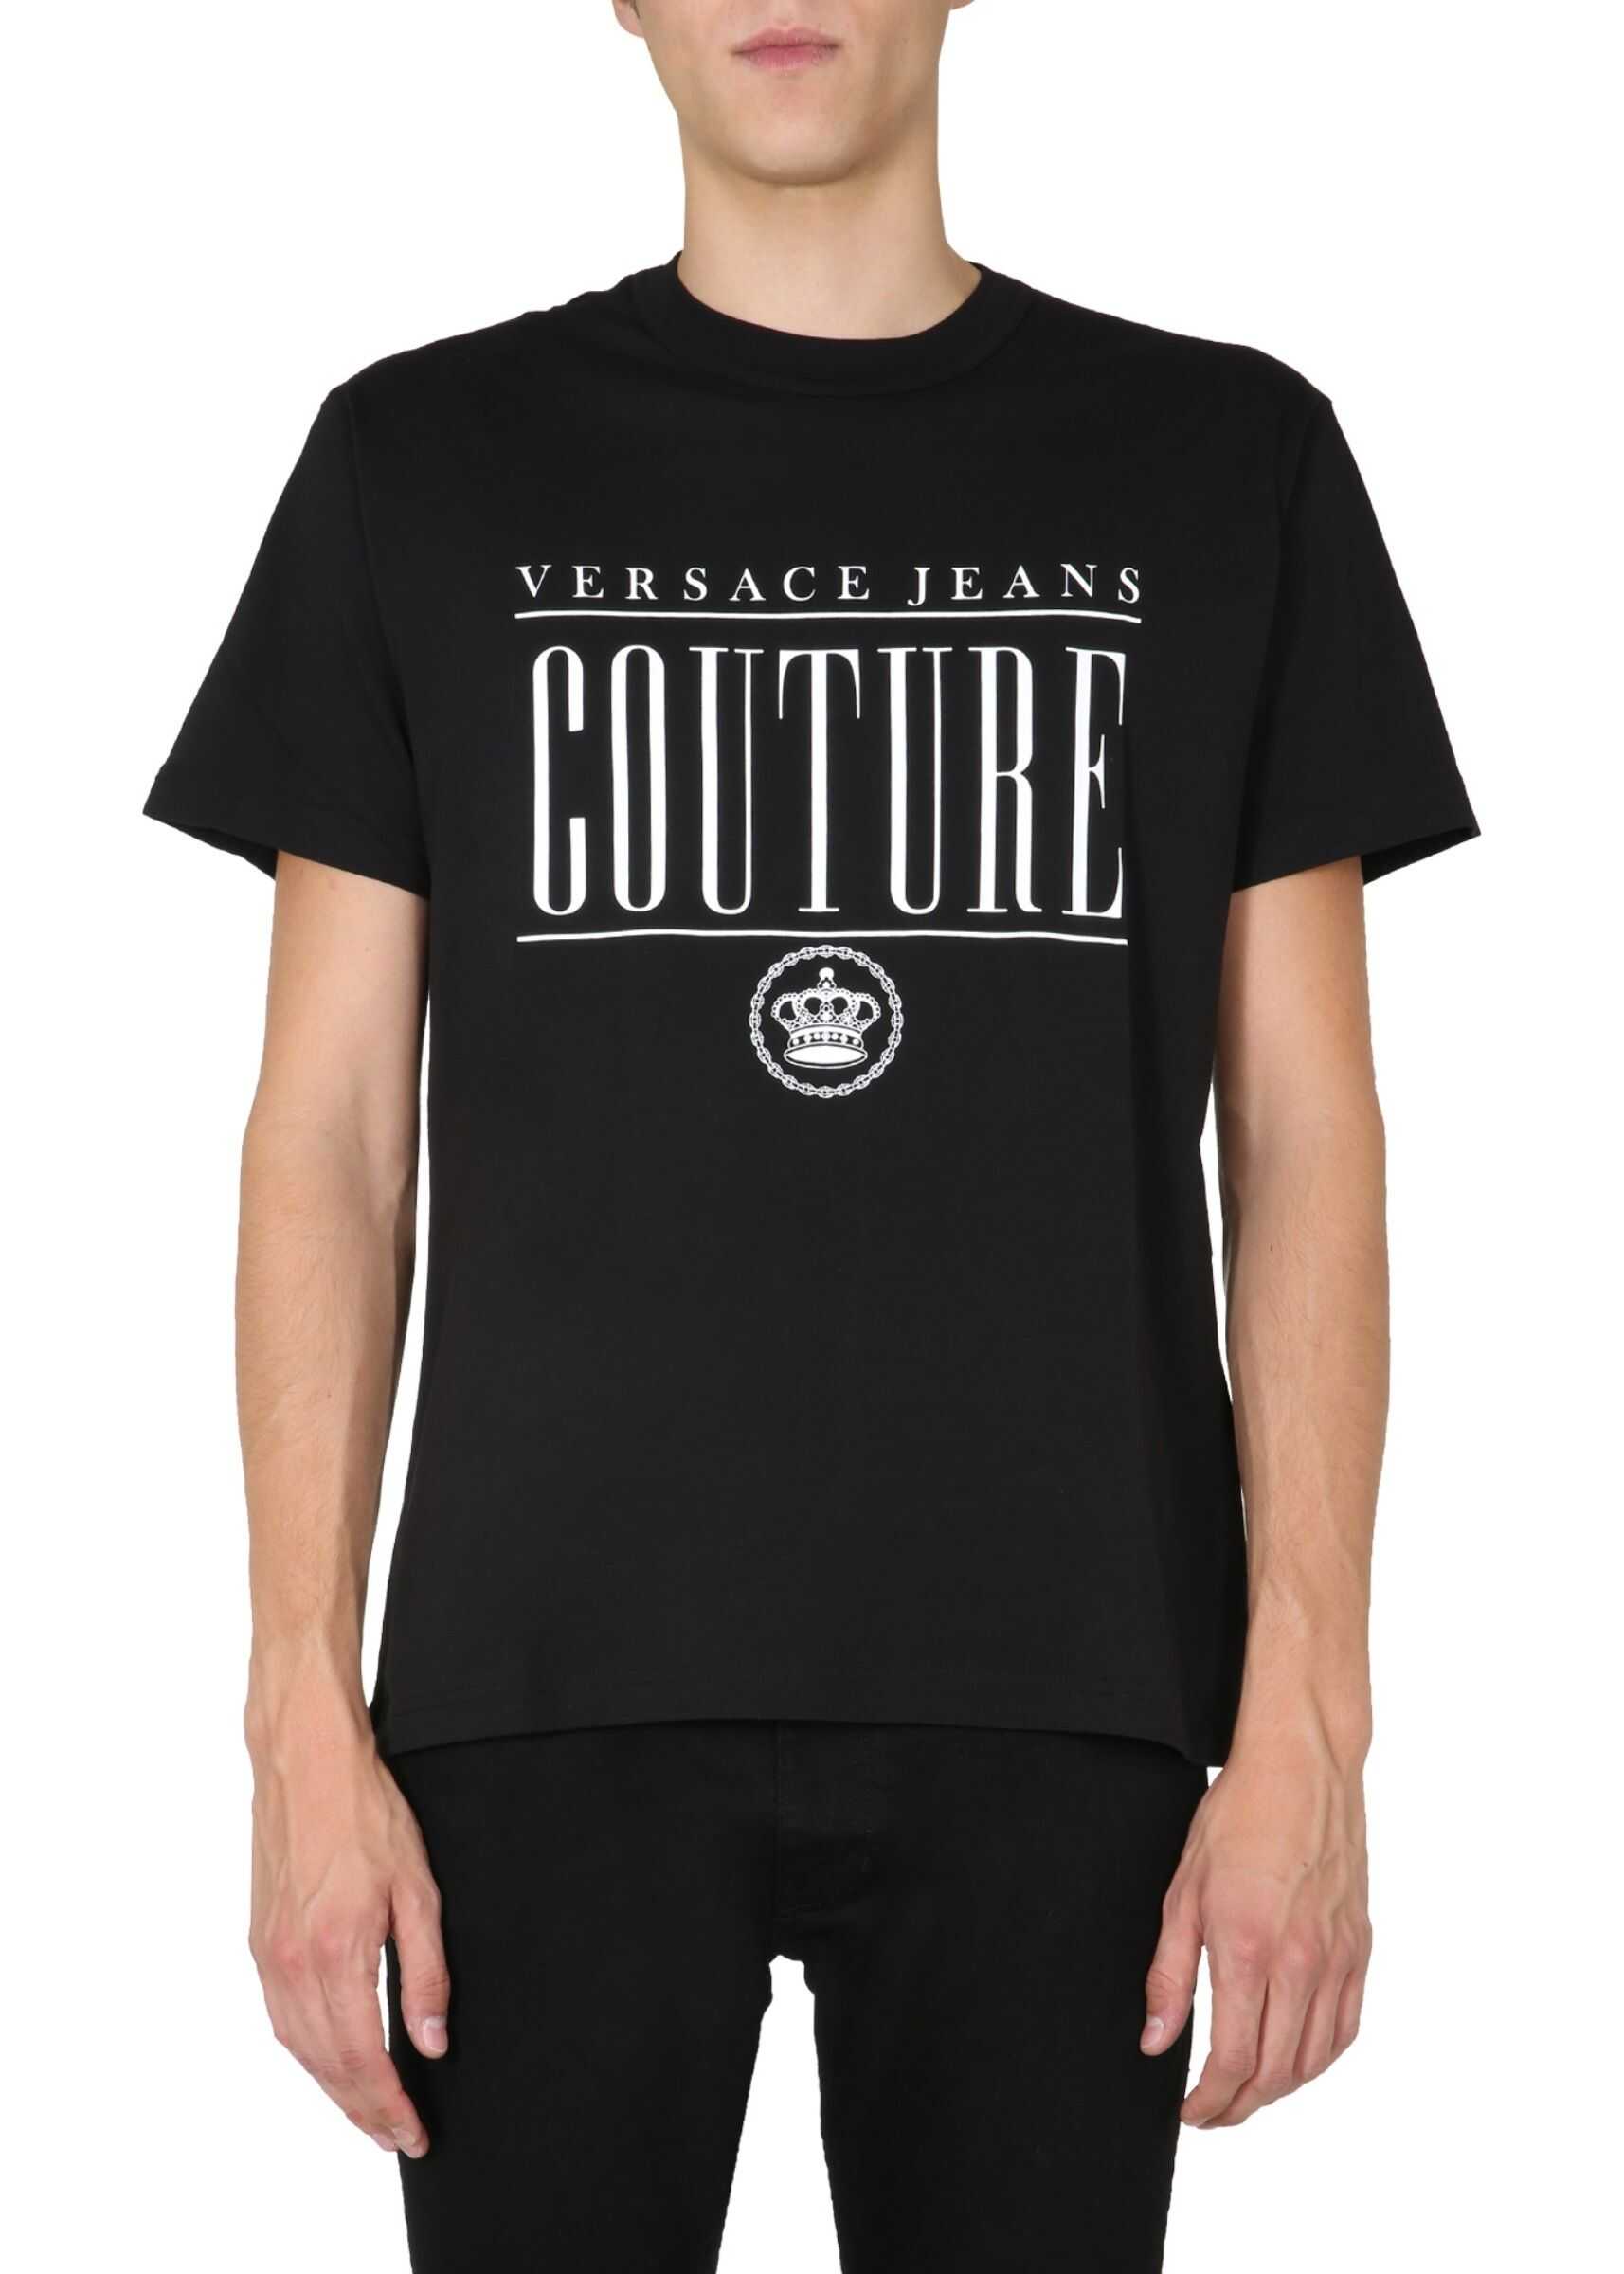 Versace Jeans Couture Crew Neck T-Shirt BLACK